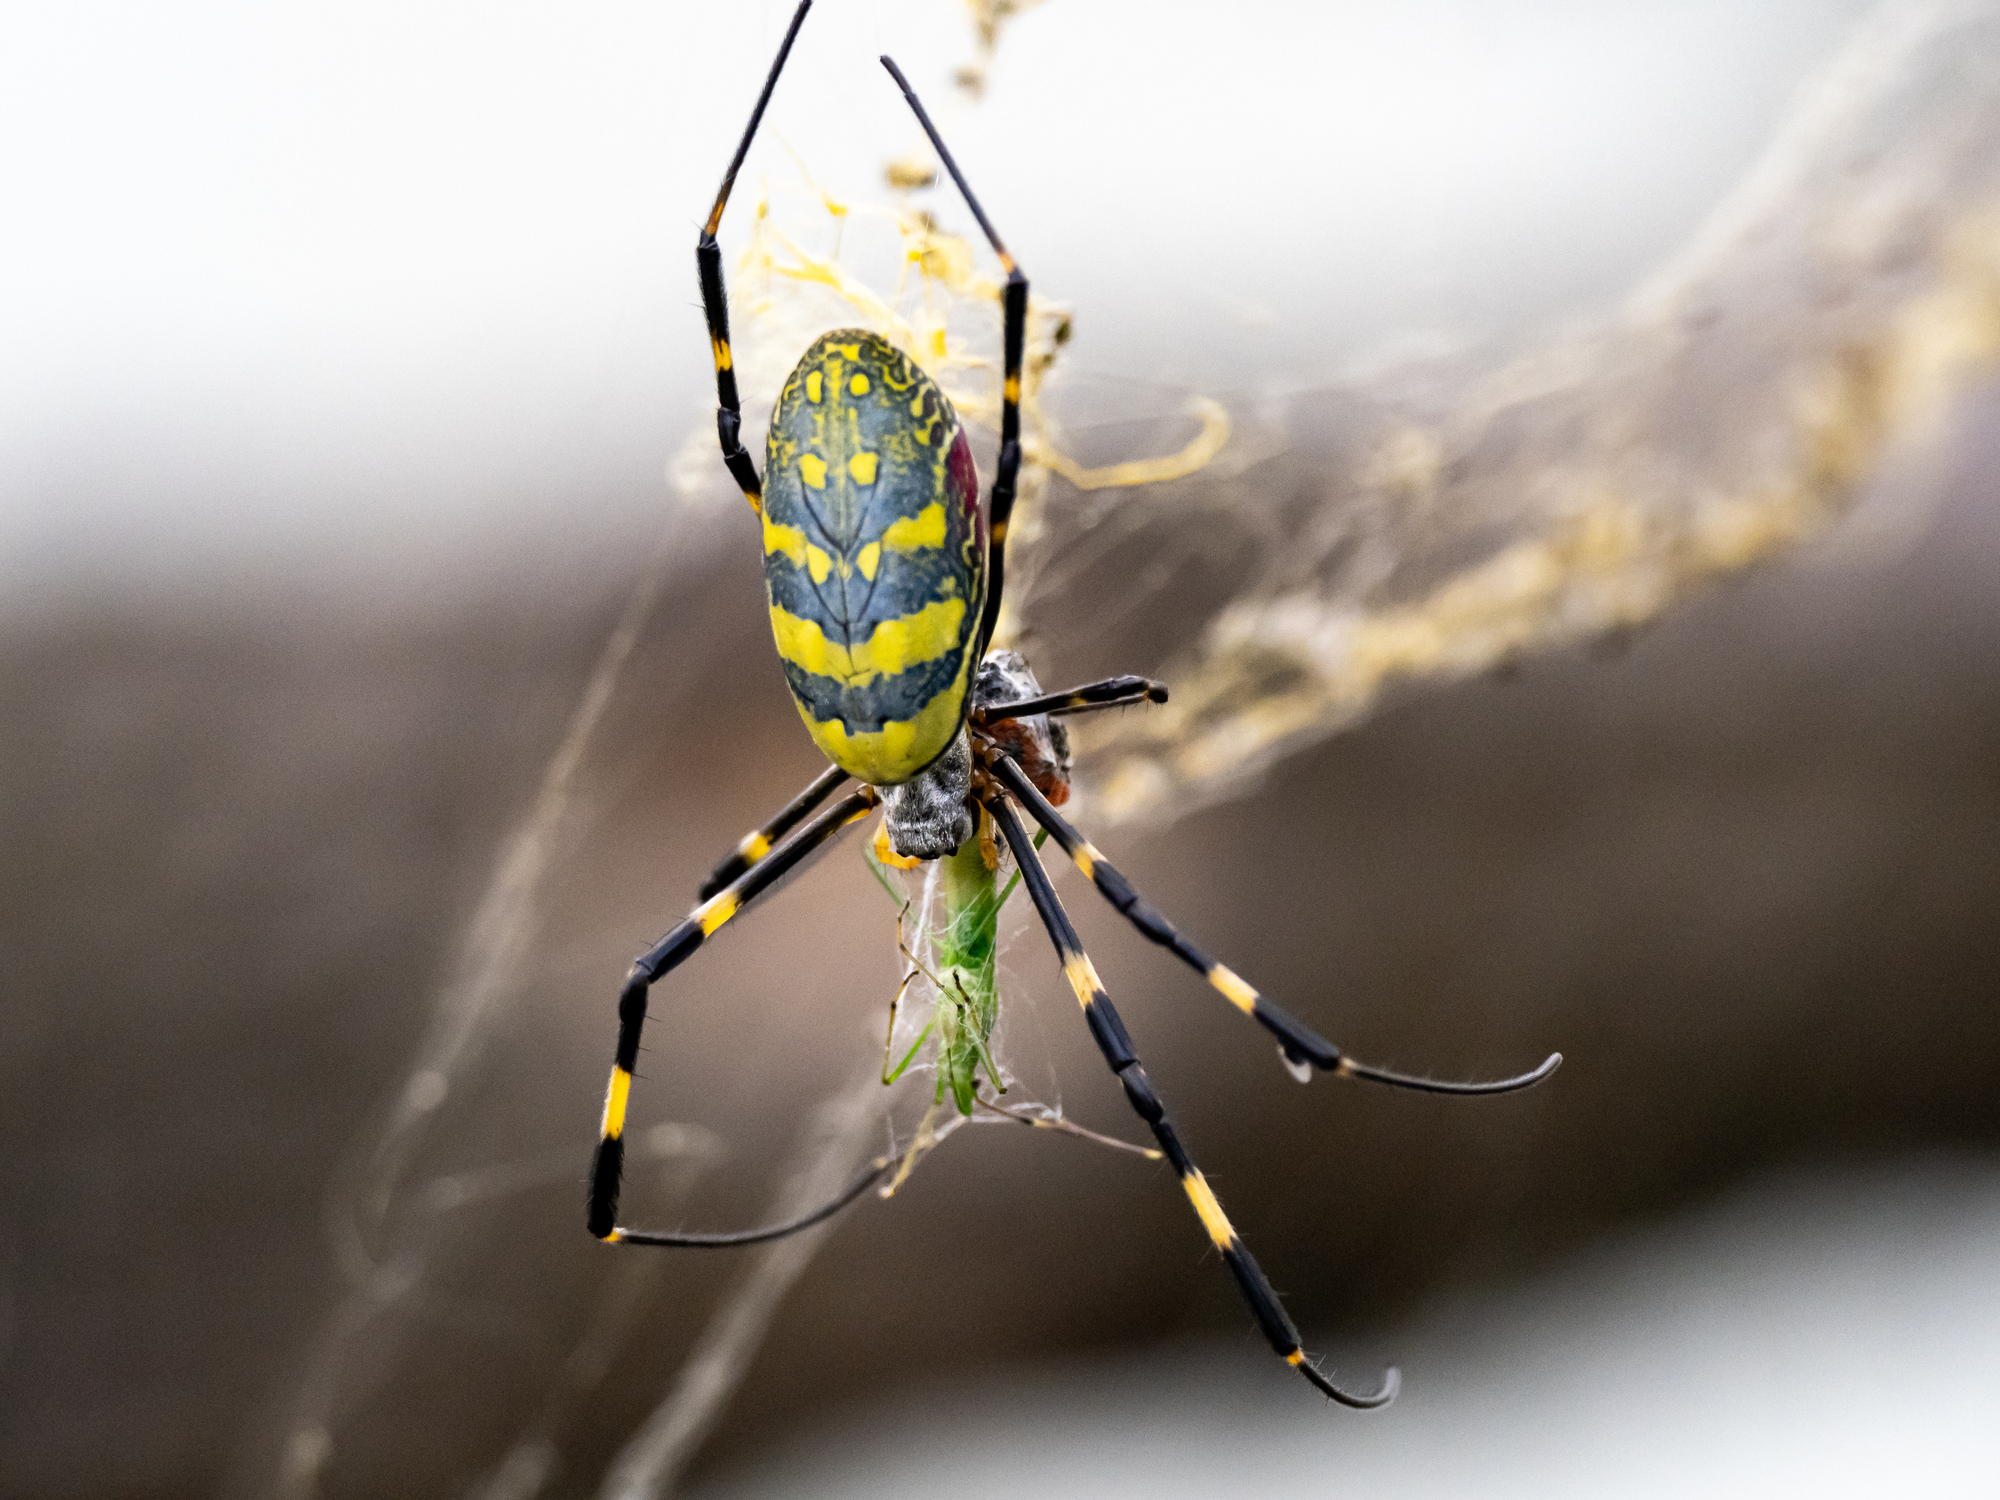 Black-legged Golden Silk Orb-web spider